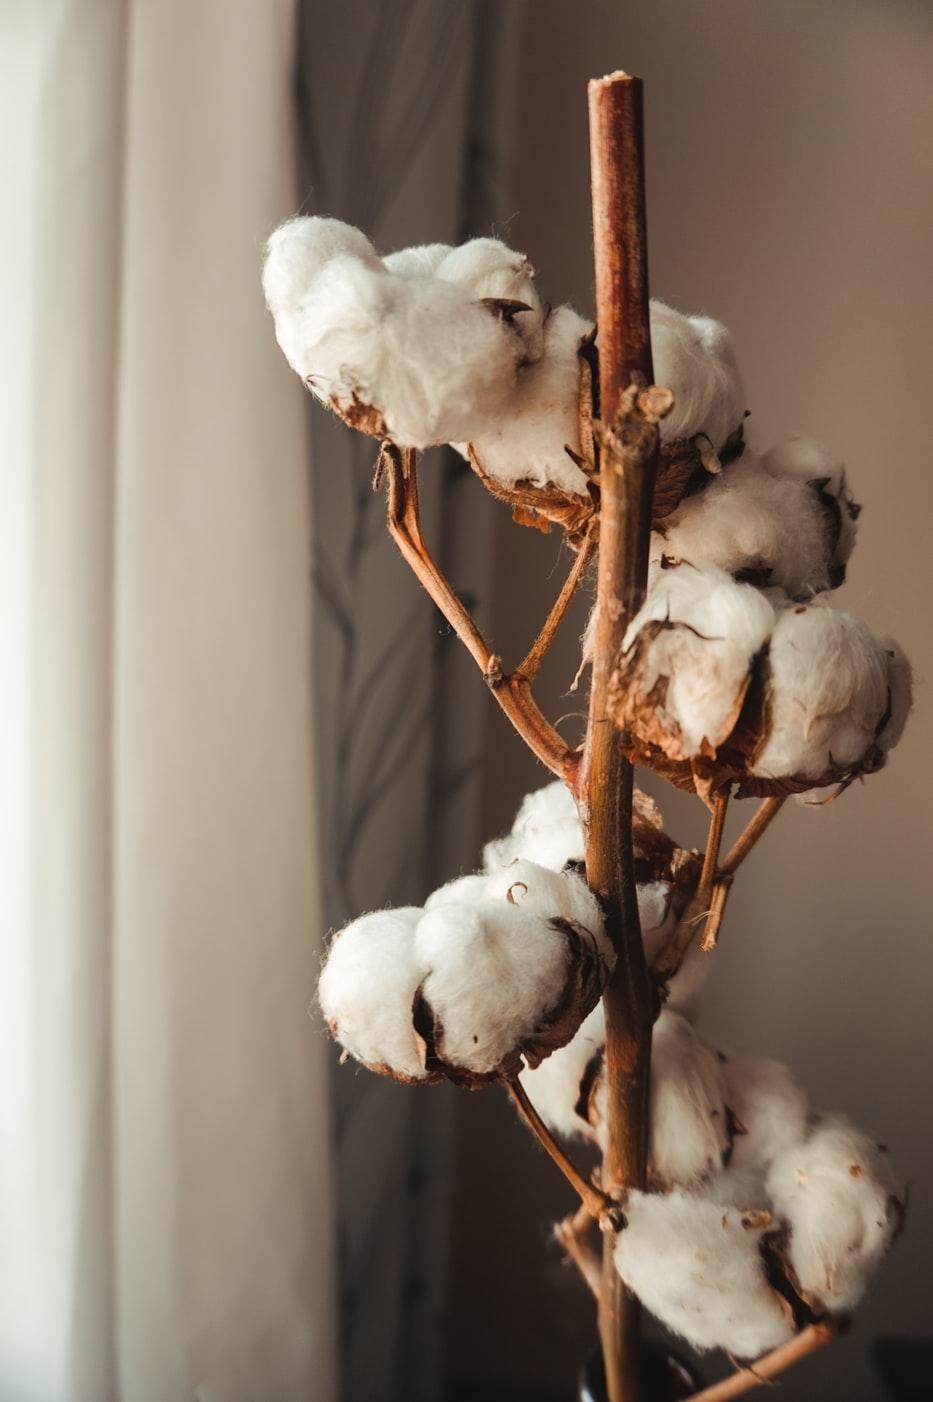 Tree Raw Cotton Buds On White Soft Cotton Textured Background